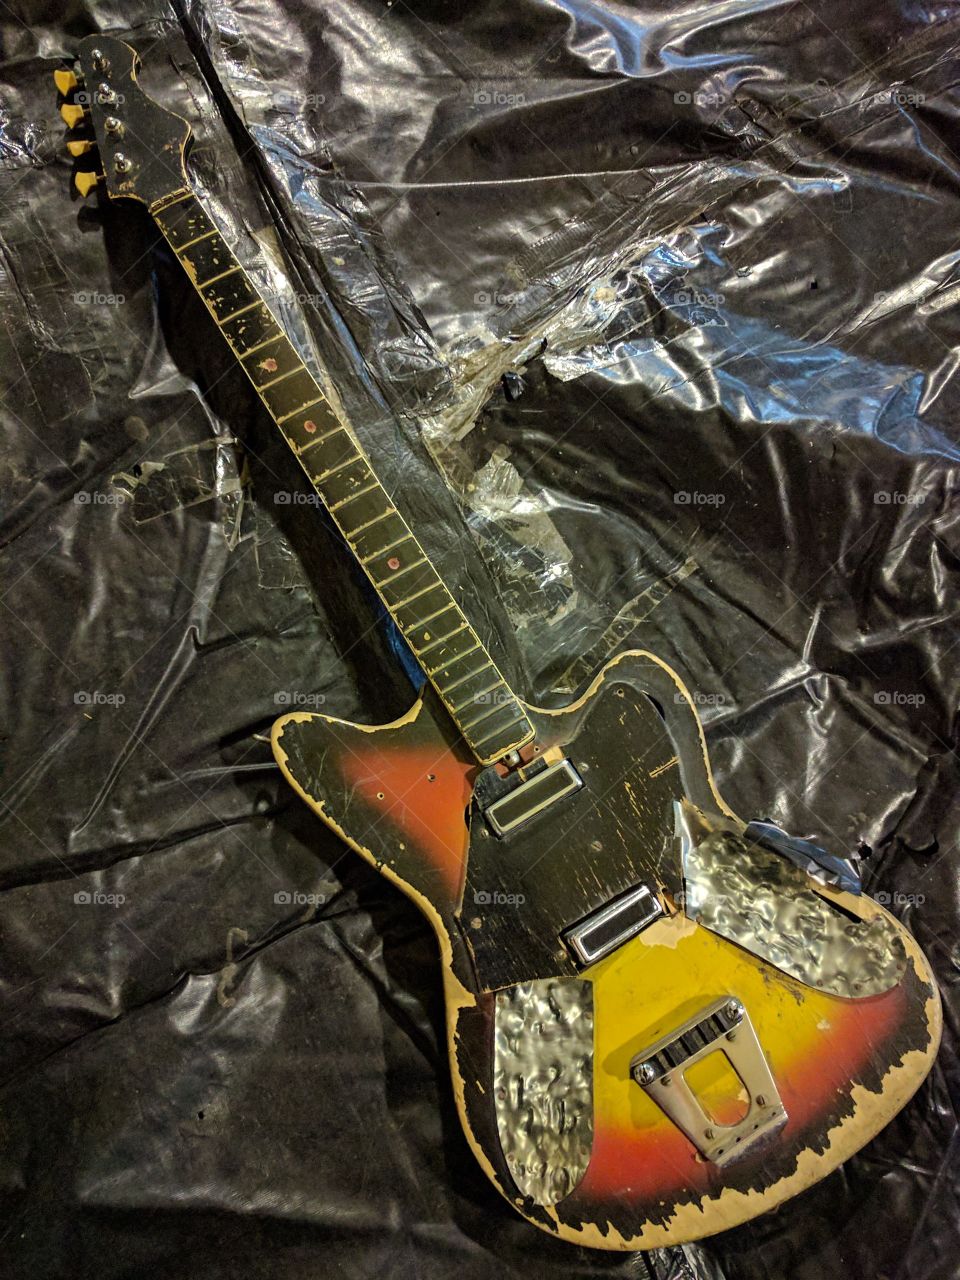 Old broken guitar on old broken vinyl